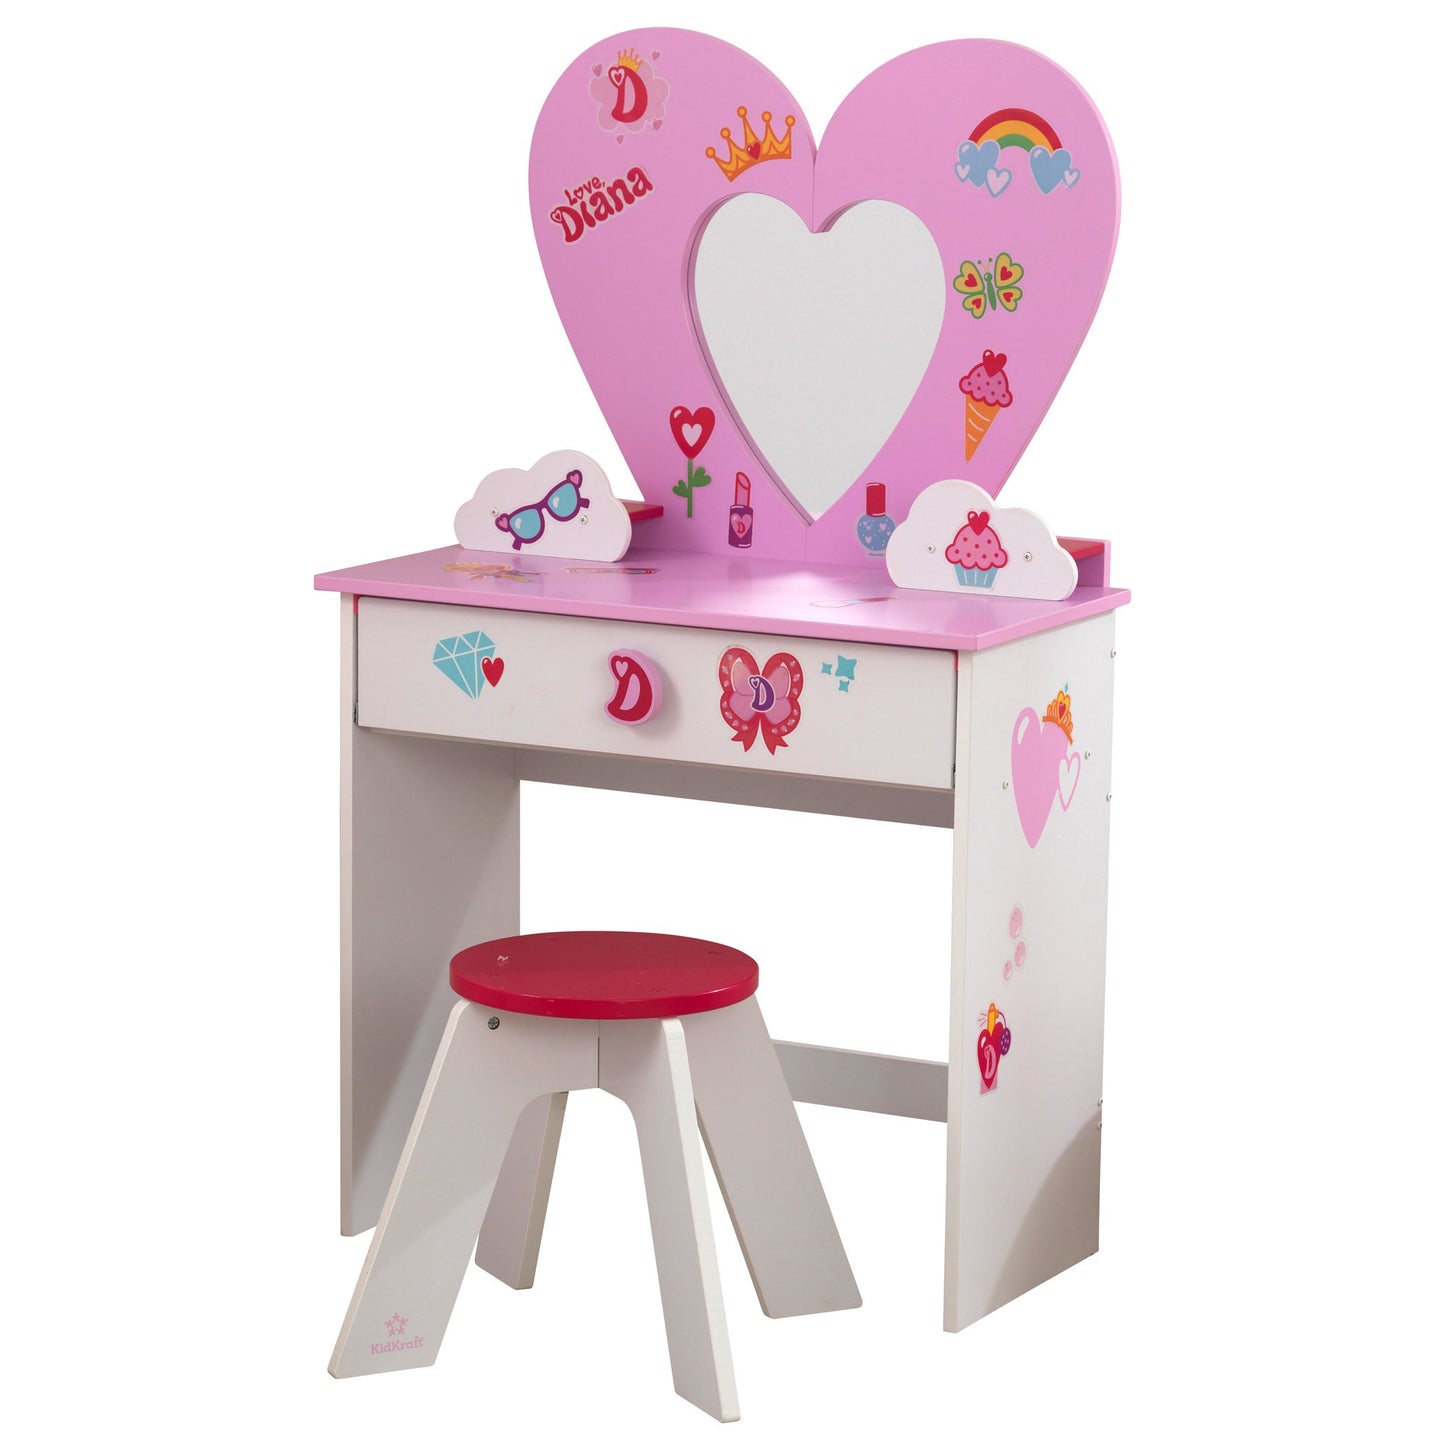 Love, Diana™ Heart Vanity Toy Set